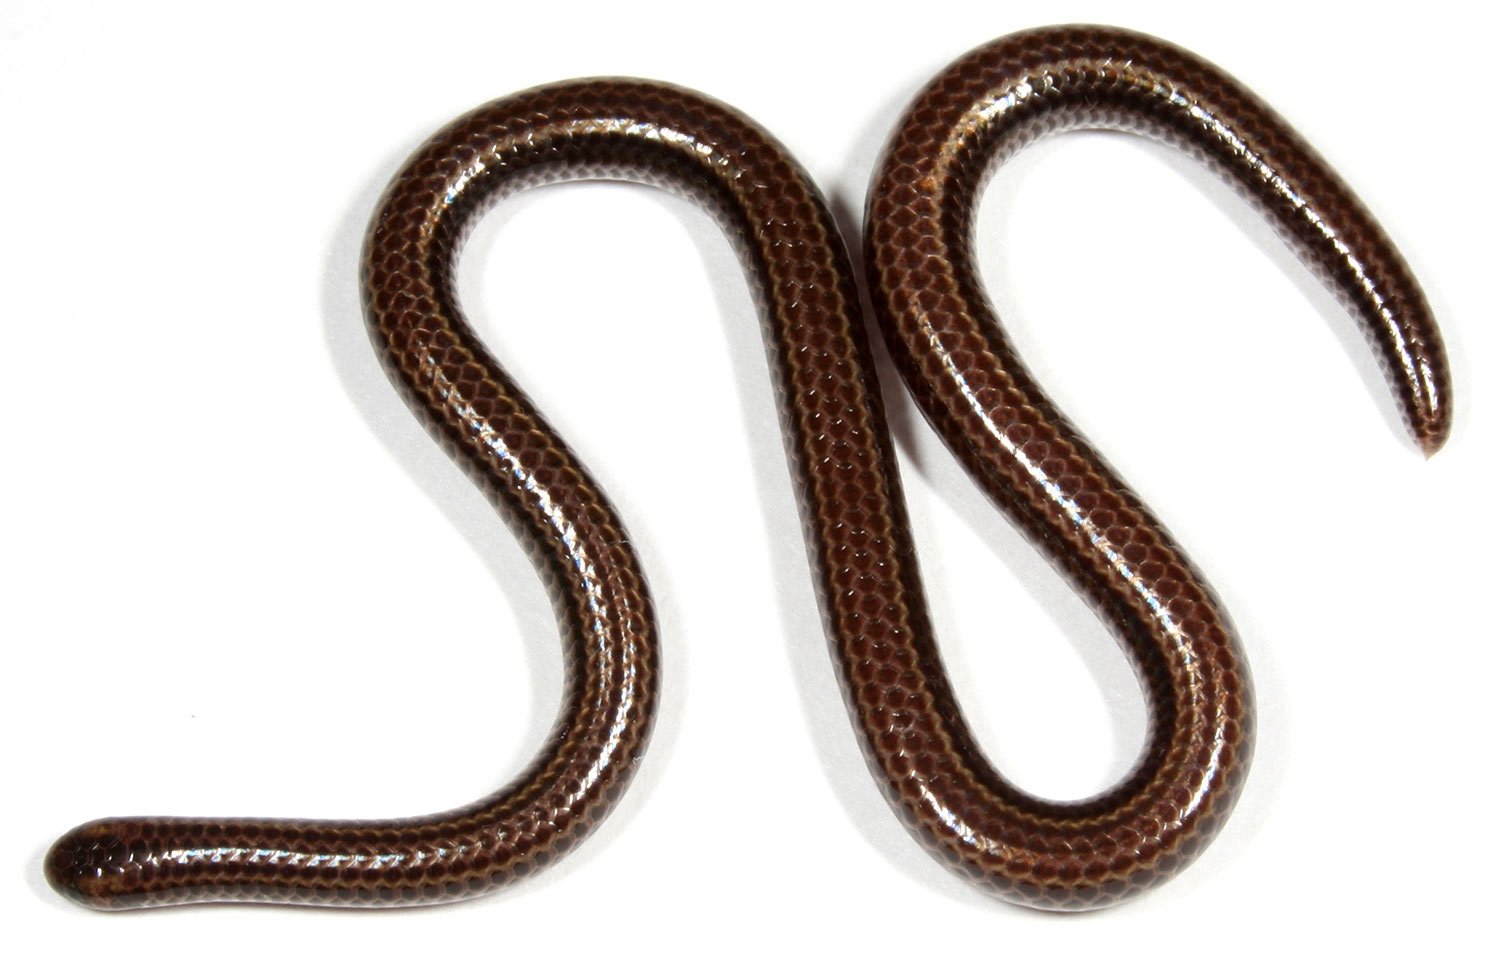 Leptotyphlops carlae змея